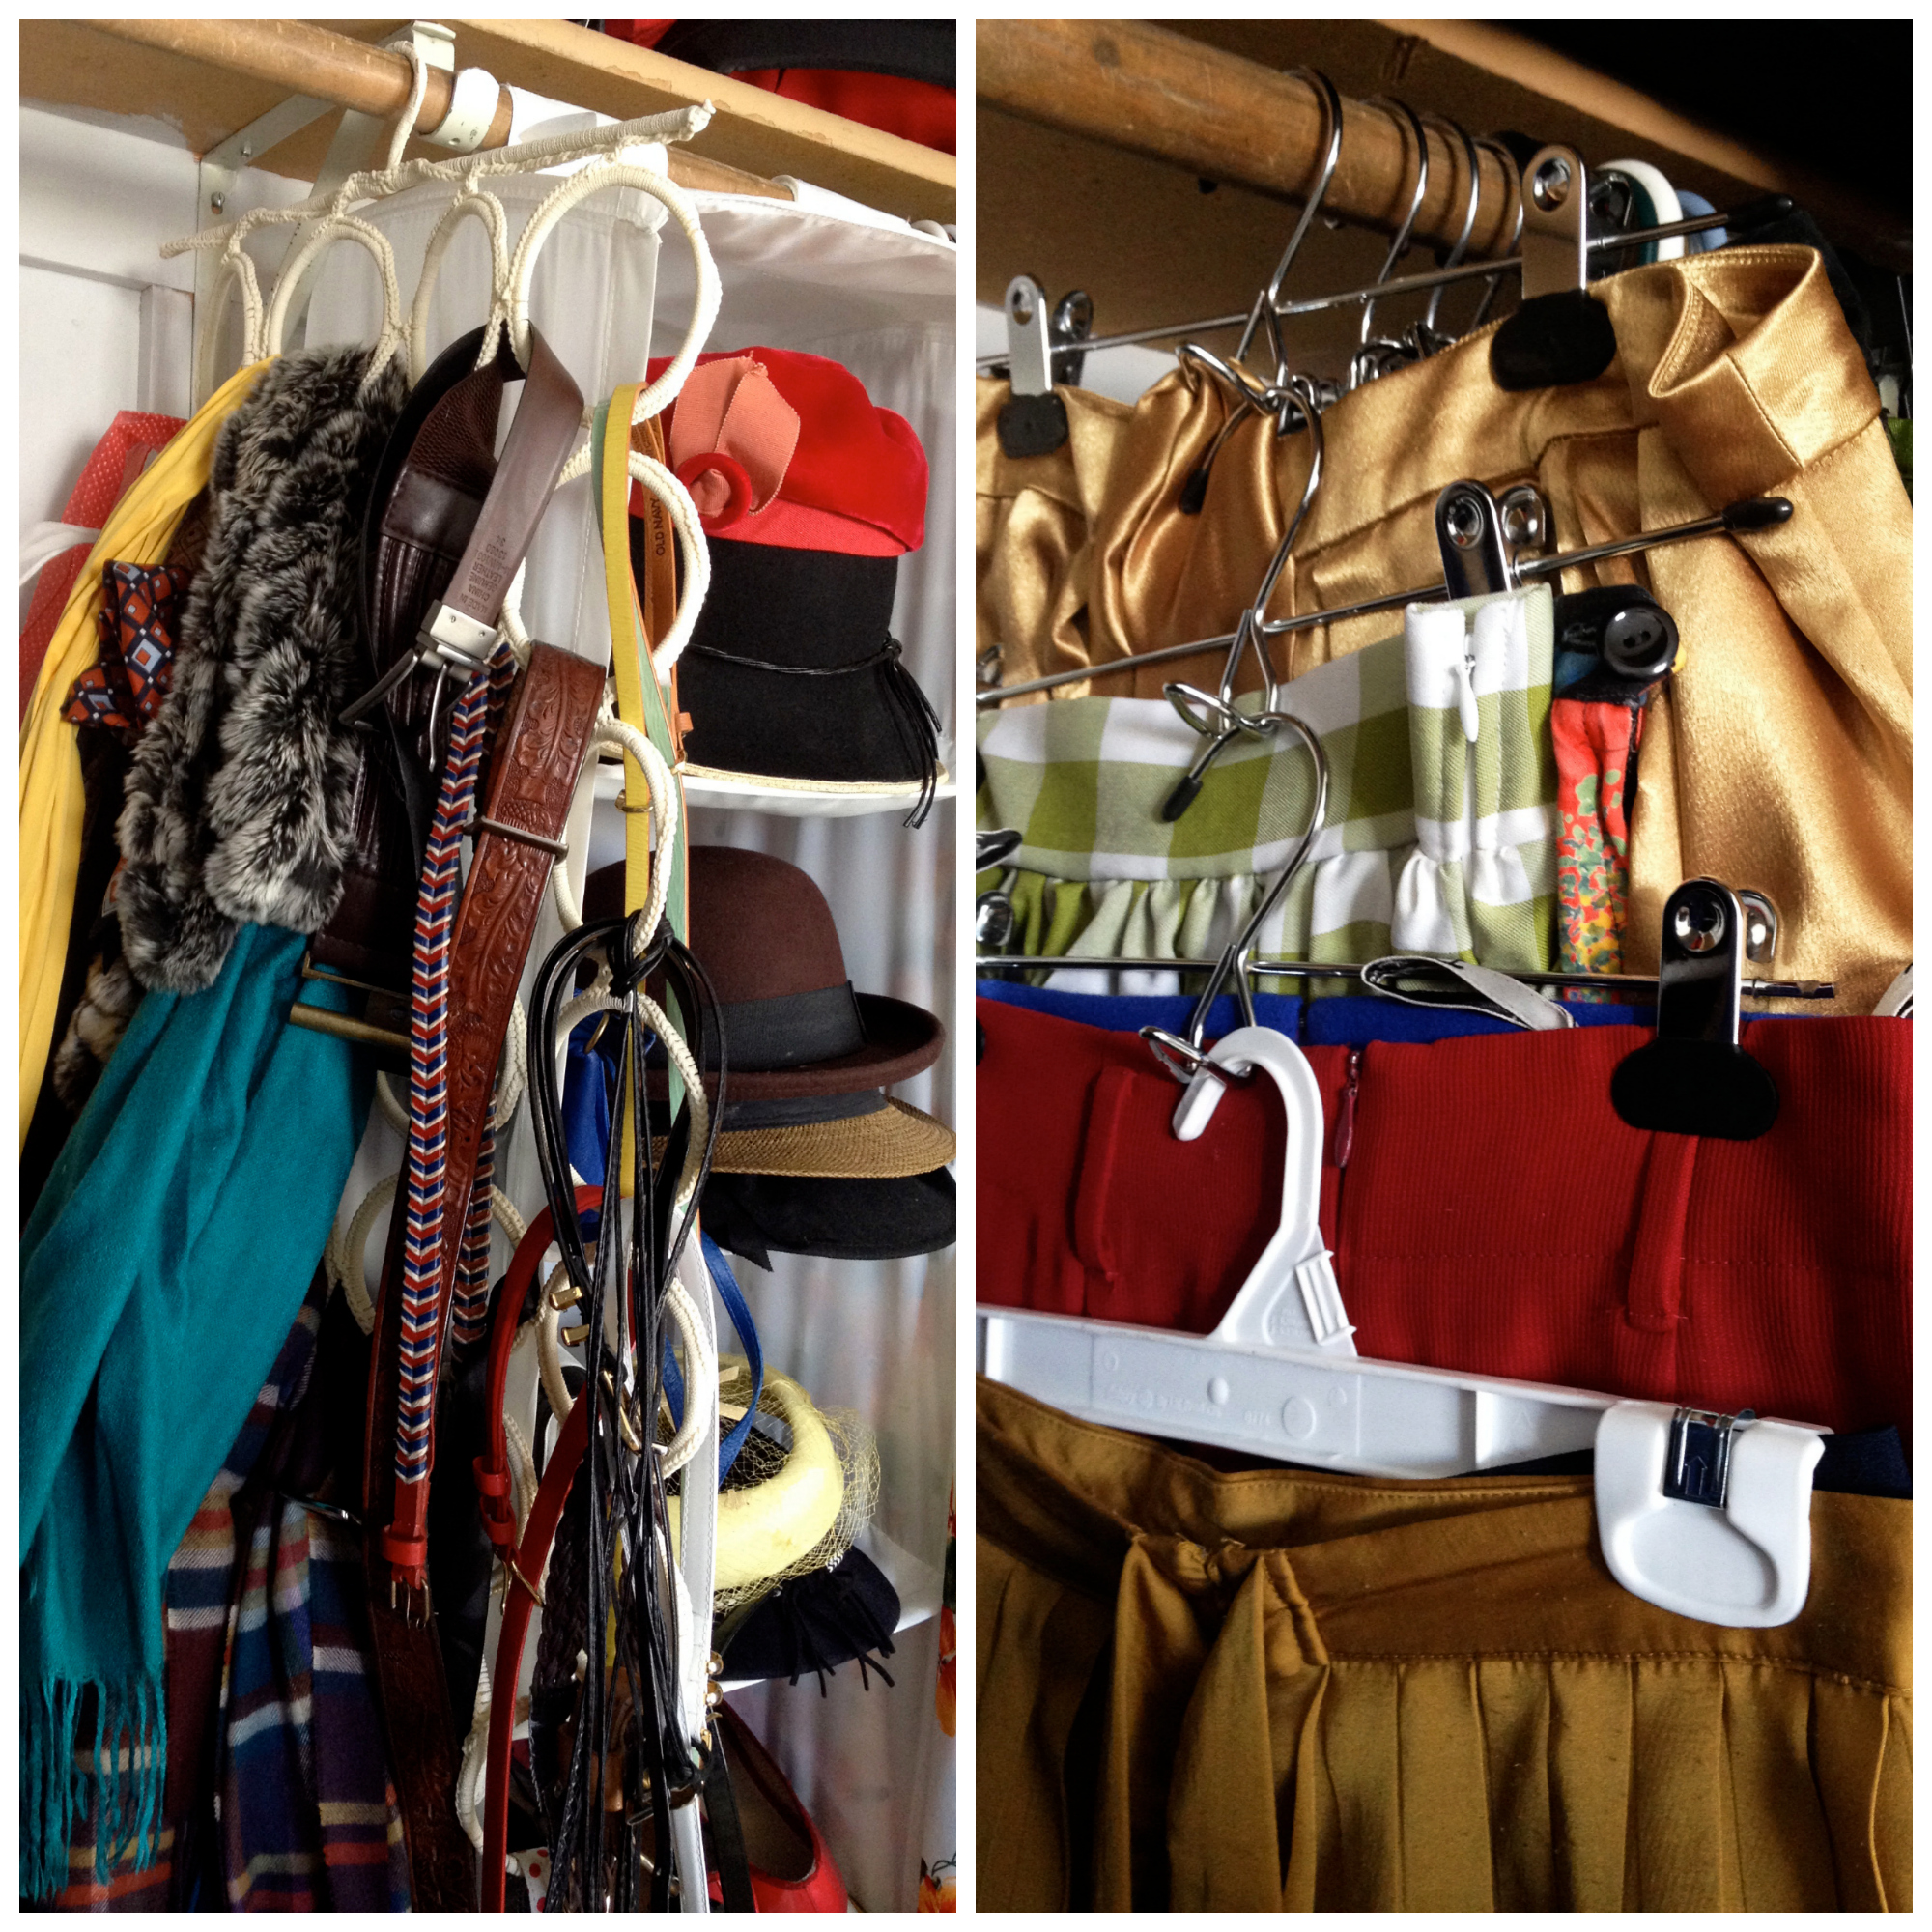 closet, wardrobe, organization, tour, clothing, hanging shelf, boots, shoes, bags, hangers,